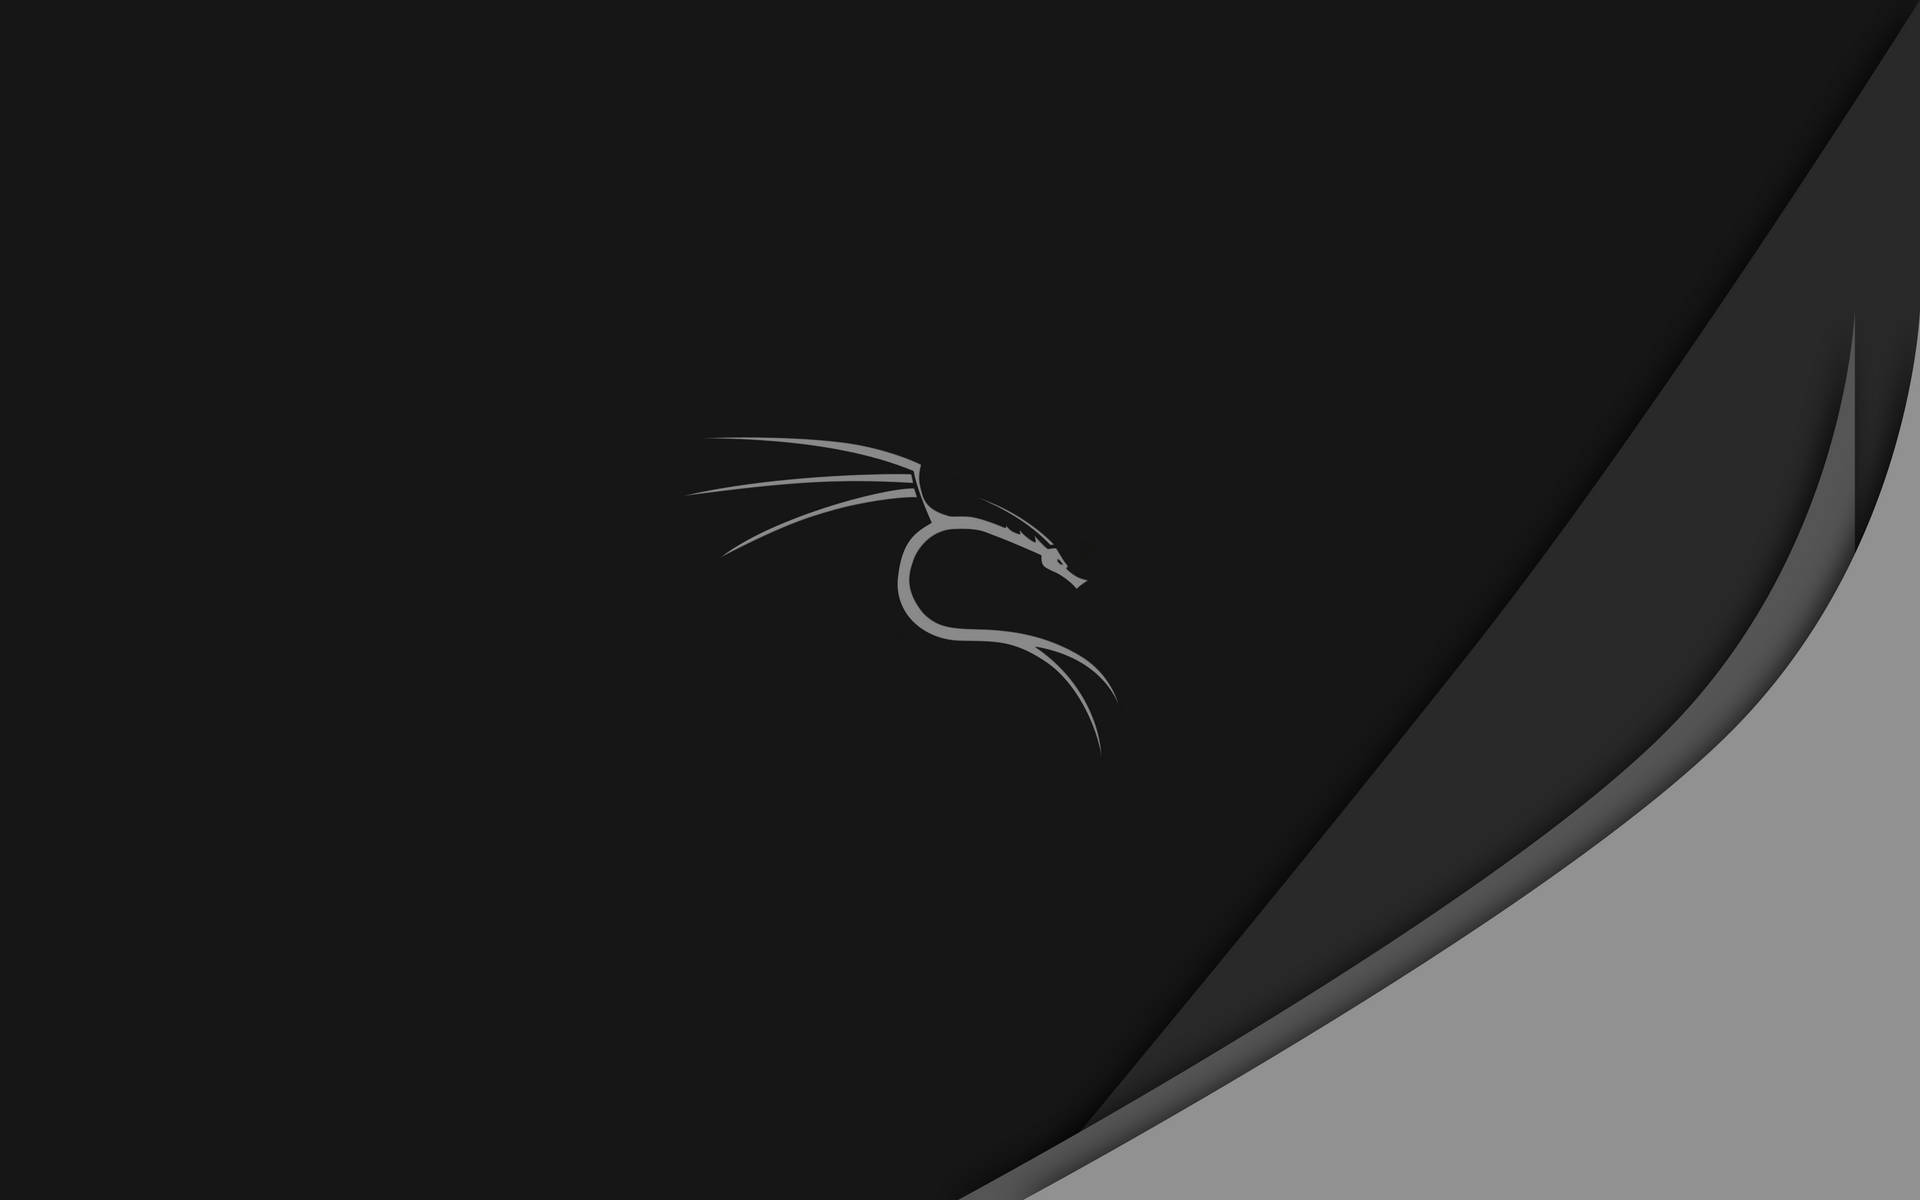 Classic Kali Linux Logo